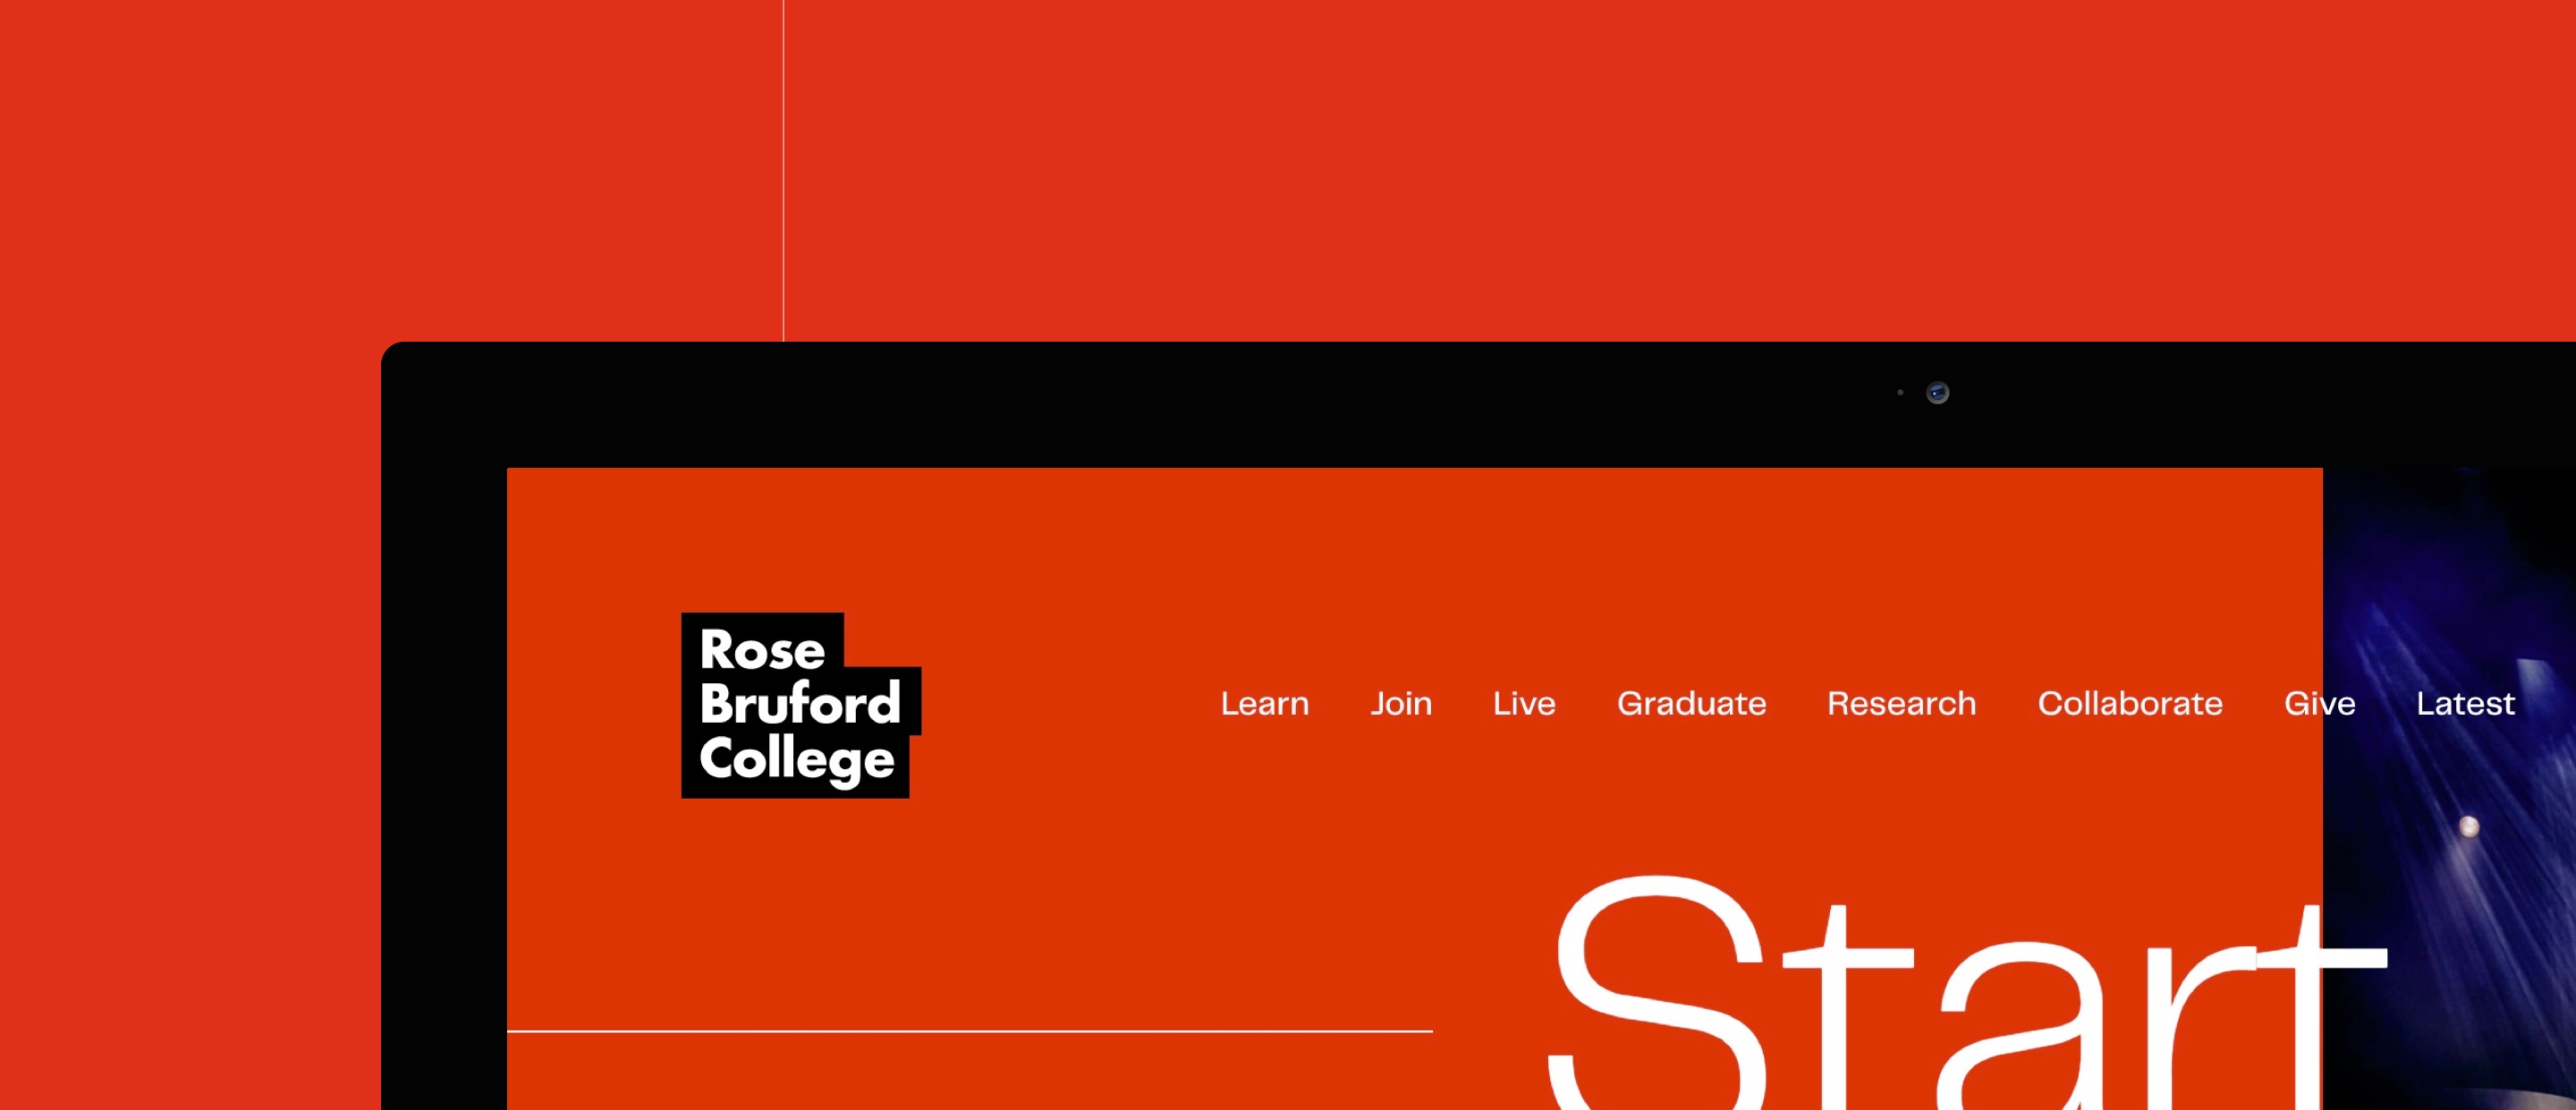 Rose Bruford College – Design, Development, SEO, CMS, Mobile Website, Perfect Header